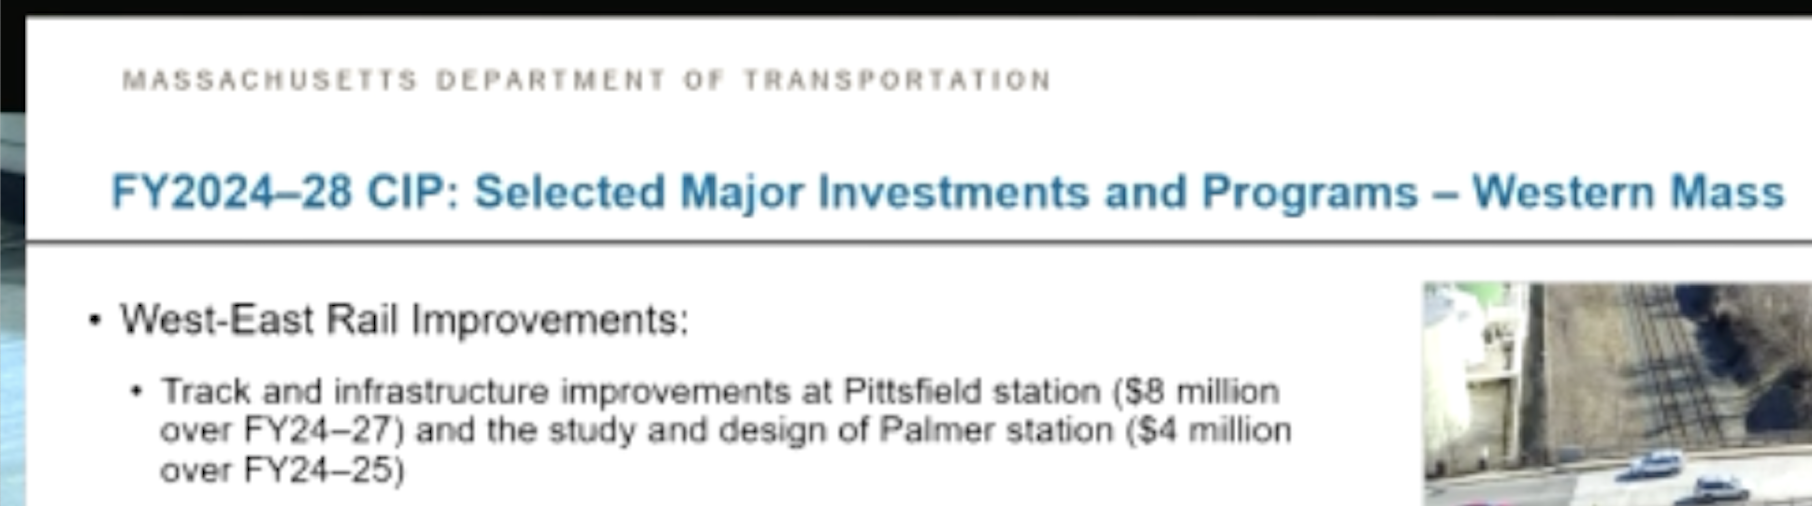 $4 million for Palmer station design in MassDOT CIP